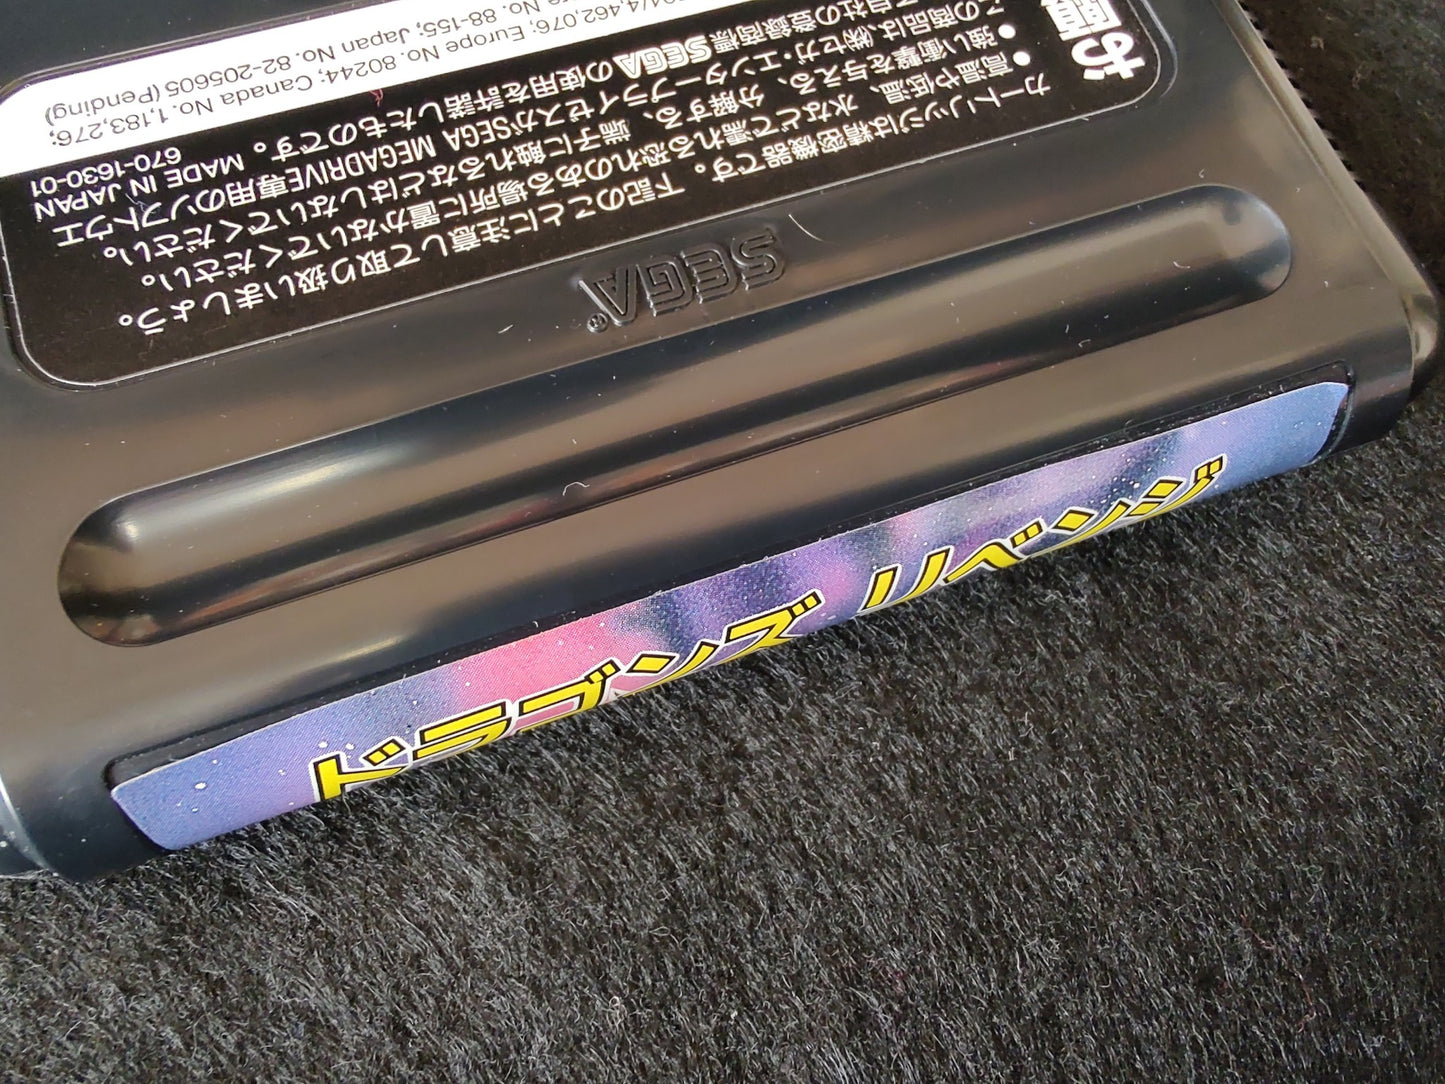 DRAGON'SREVENG SEGA MEGA DRIVE game Genesis Cartridge Boxed, Working-f1111-